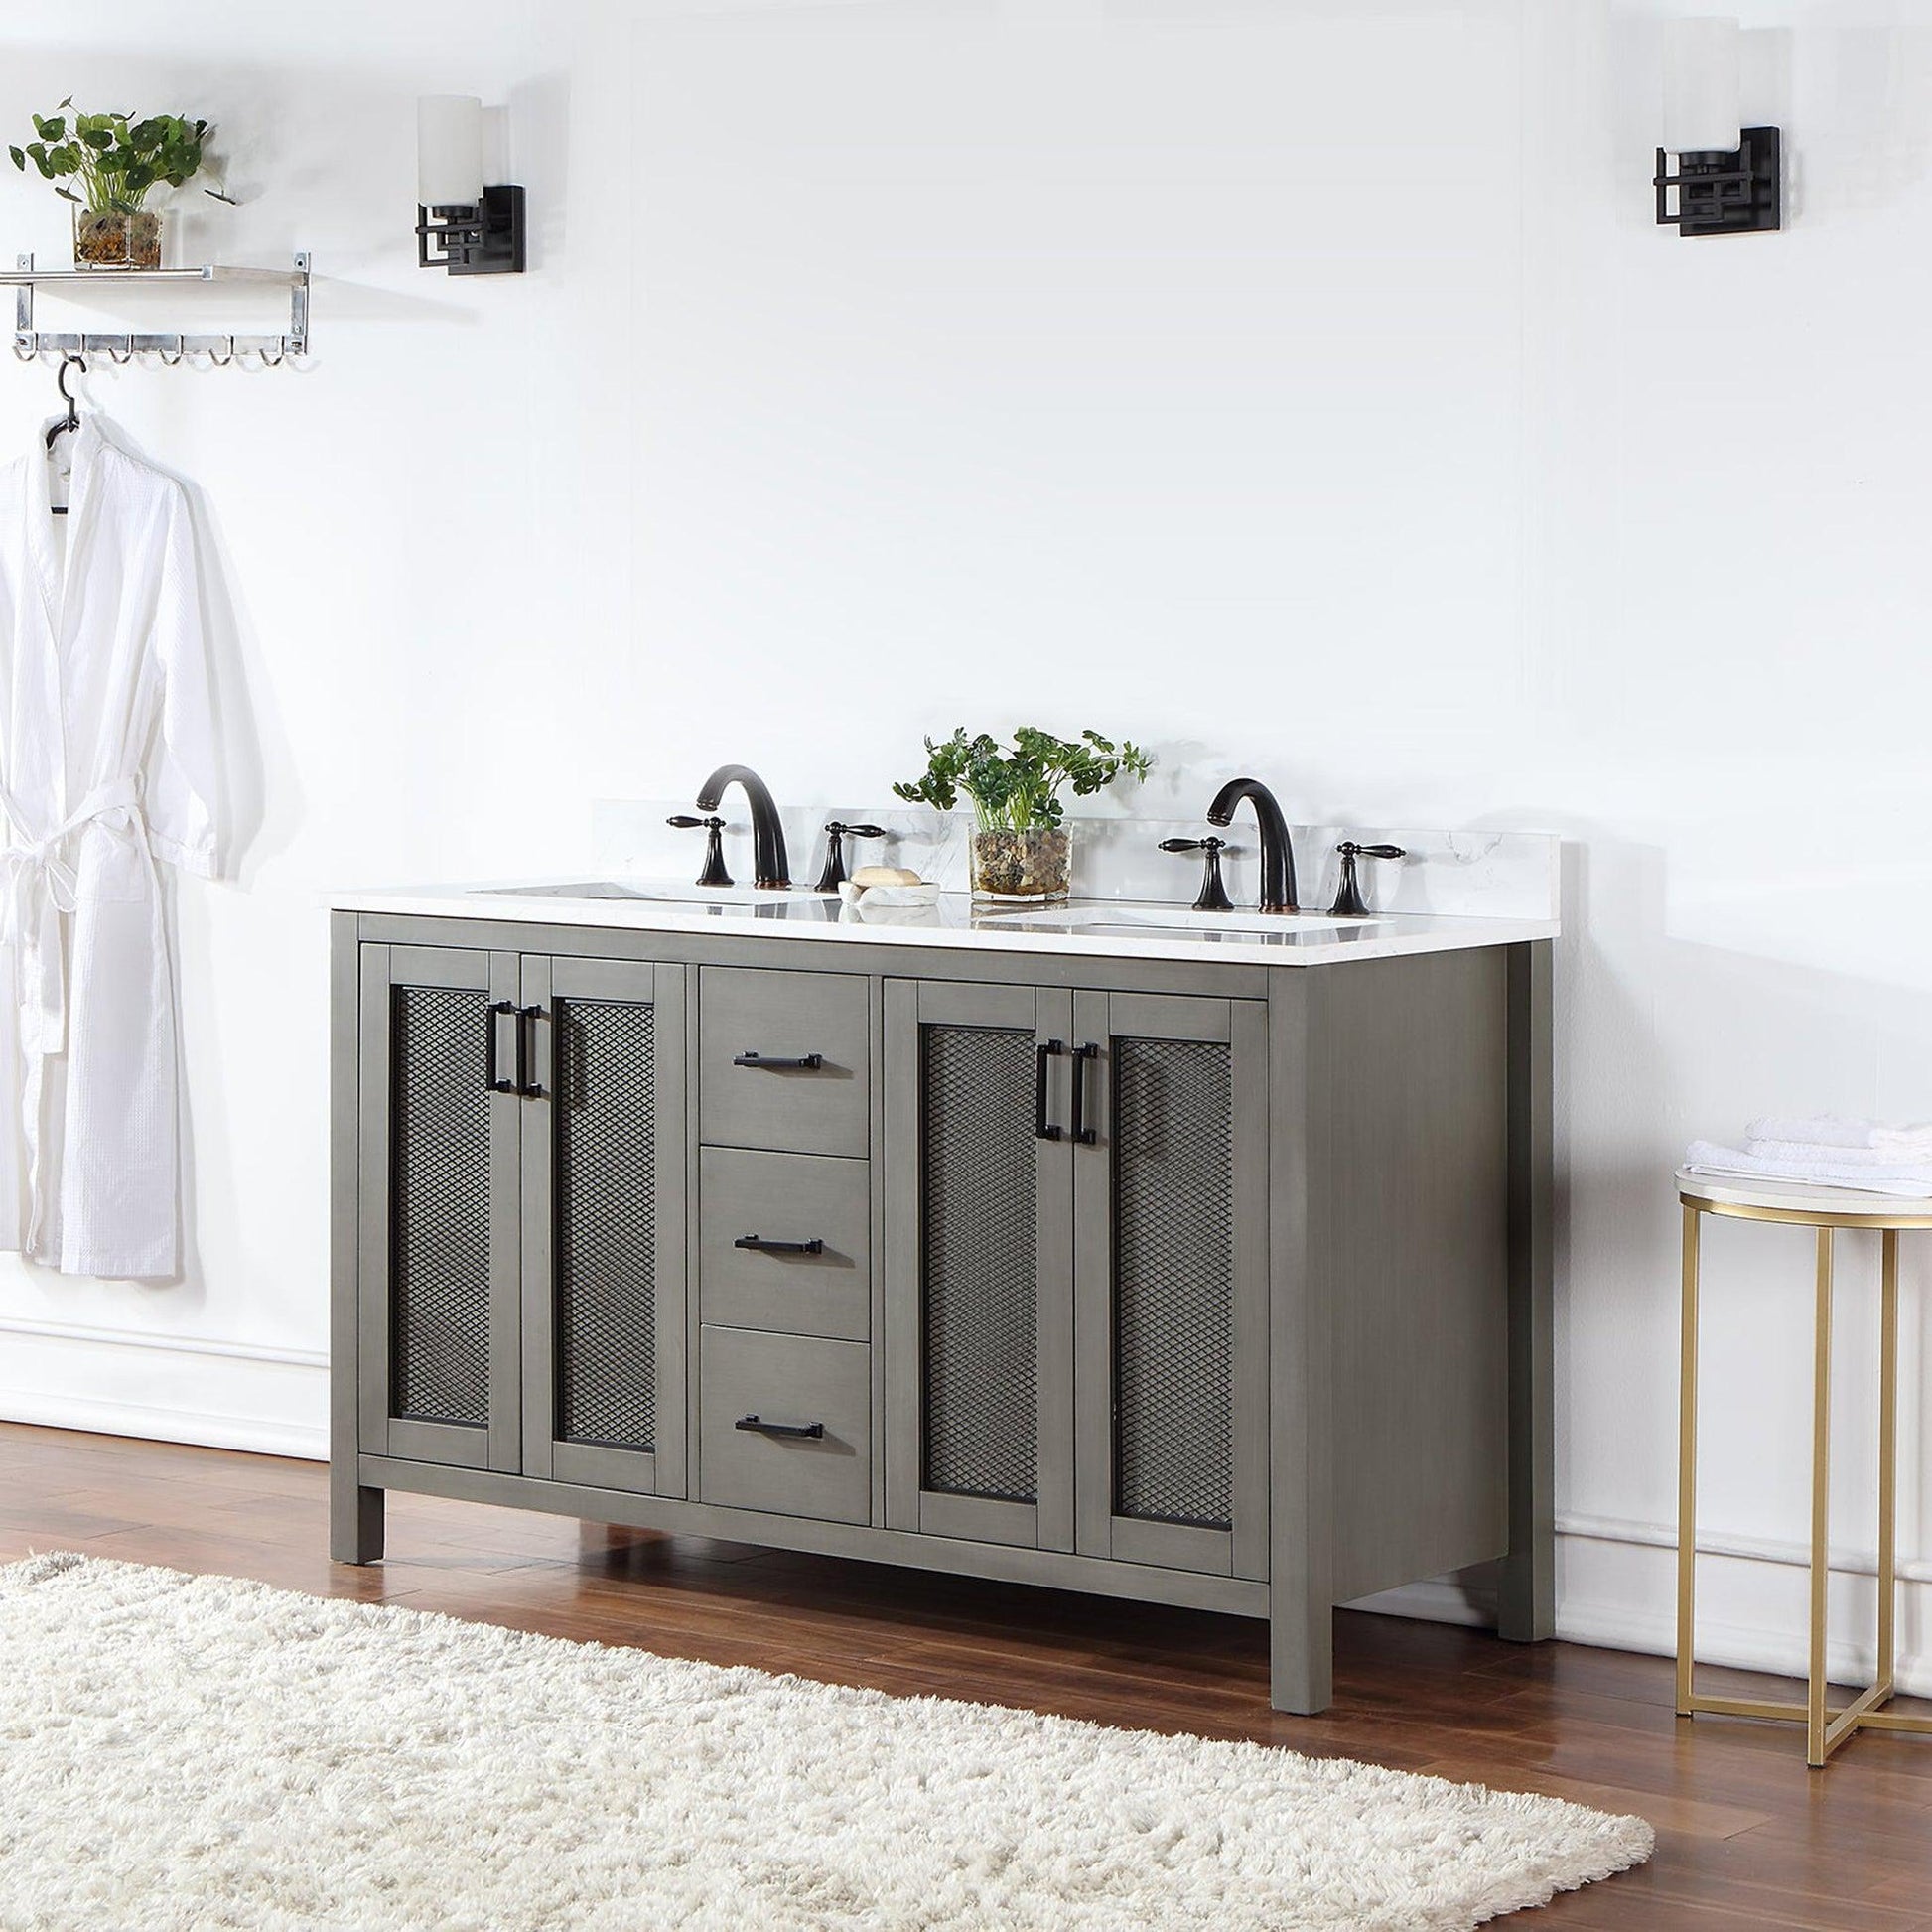 Altair Hadiya 60" Double Gray Pine Freestanding Bathroom Vanity Set With Elegant Aosta White Composite Stone Top, Two Rectangular Undermount Ceramic Sinks, Overflow, and Backsplash